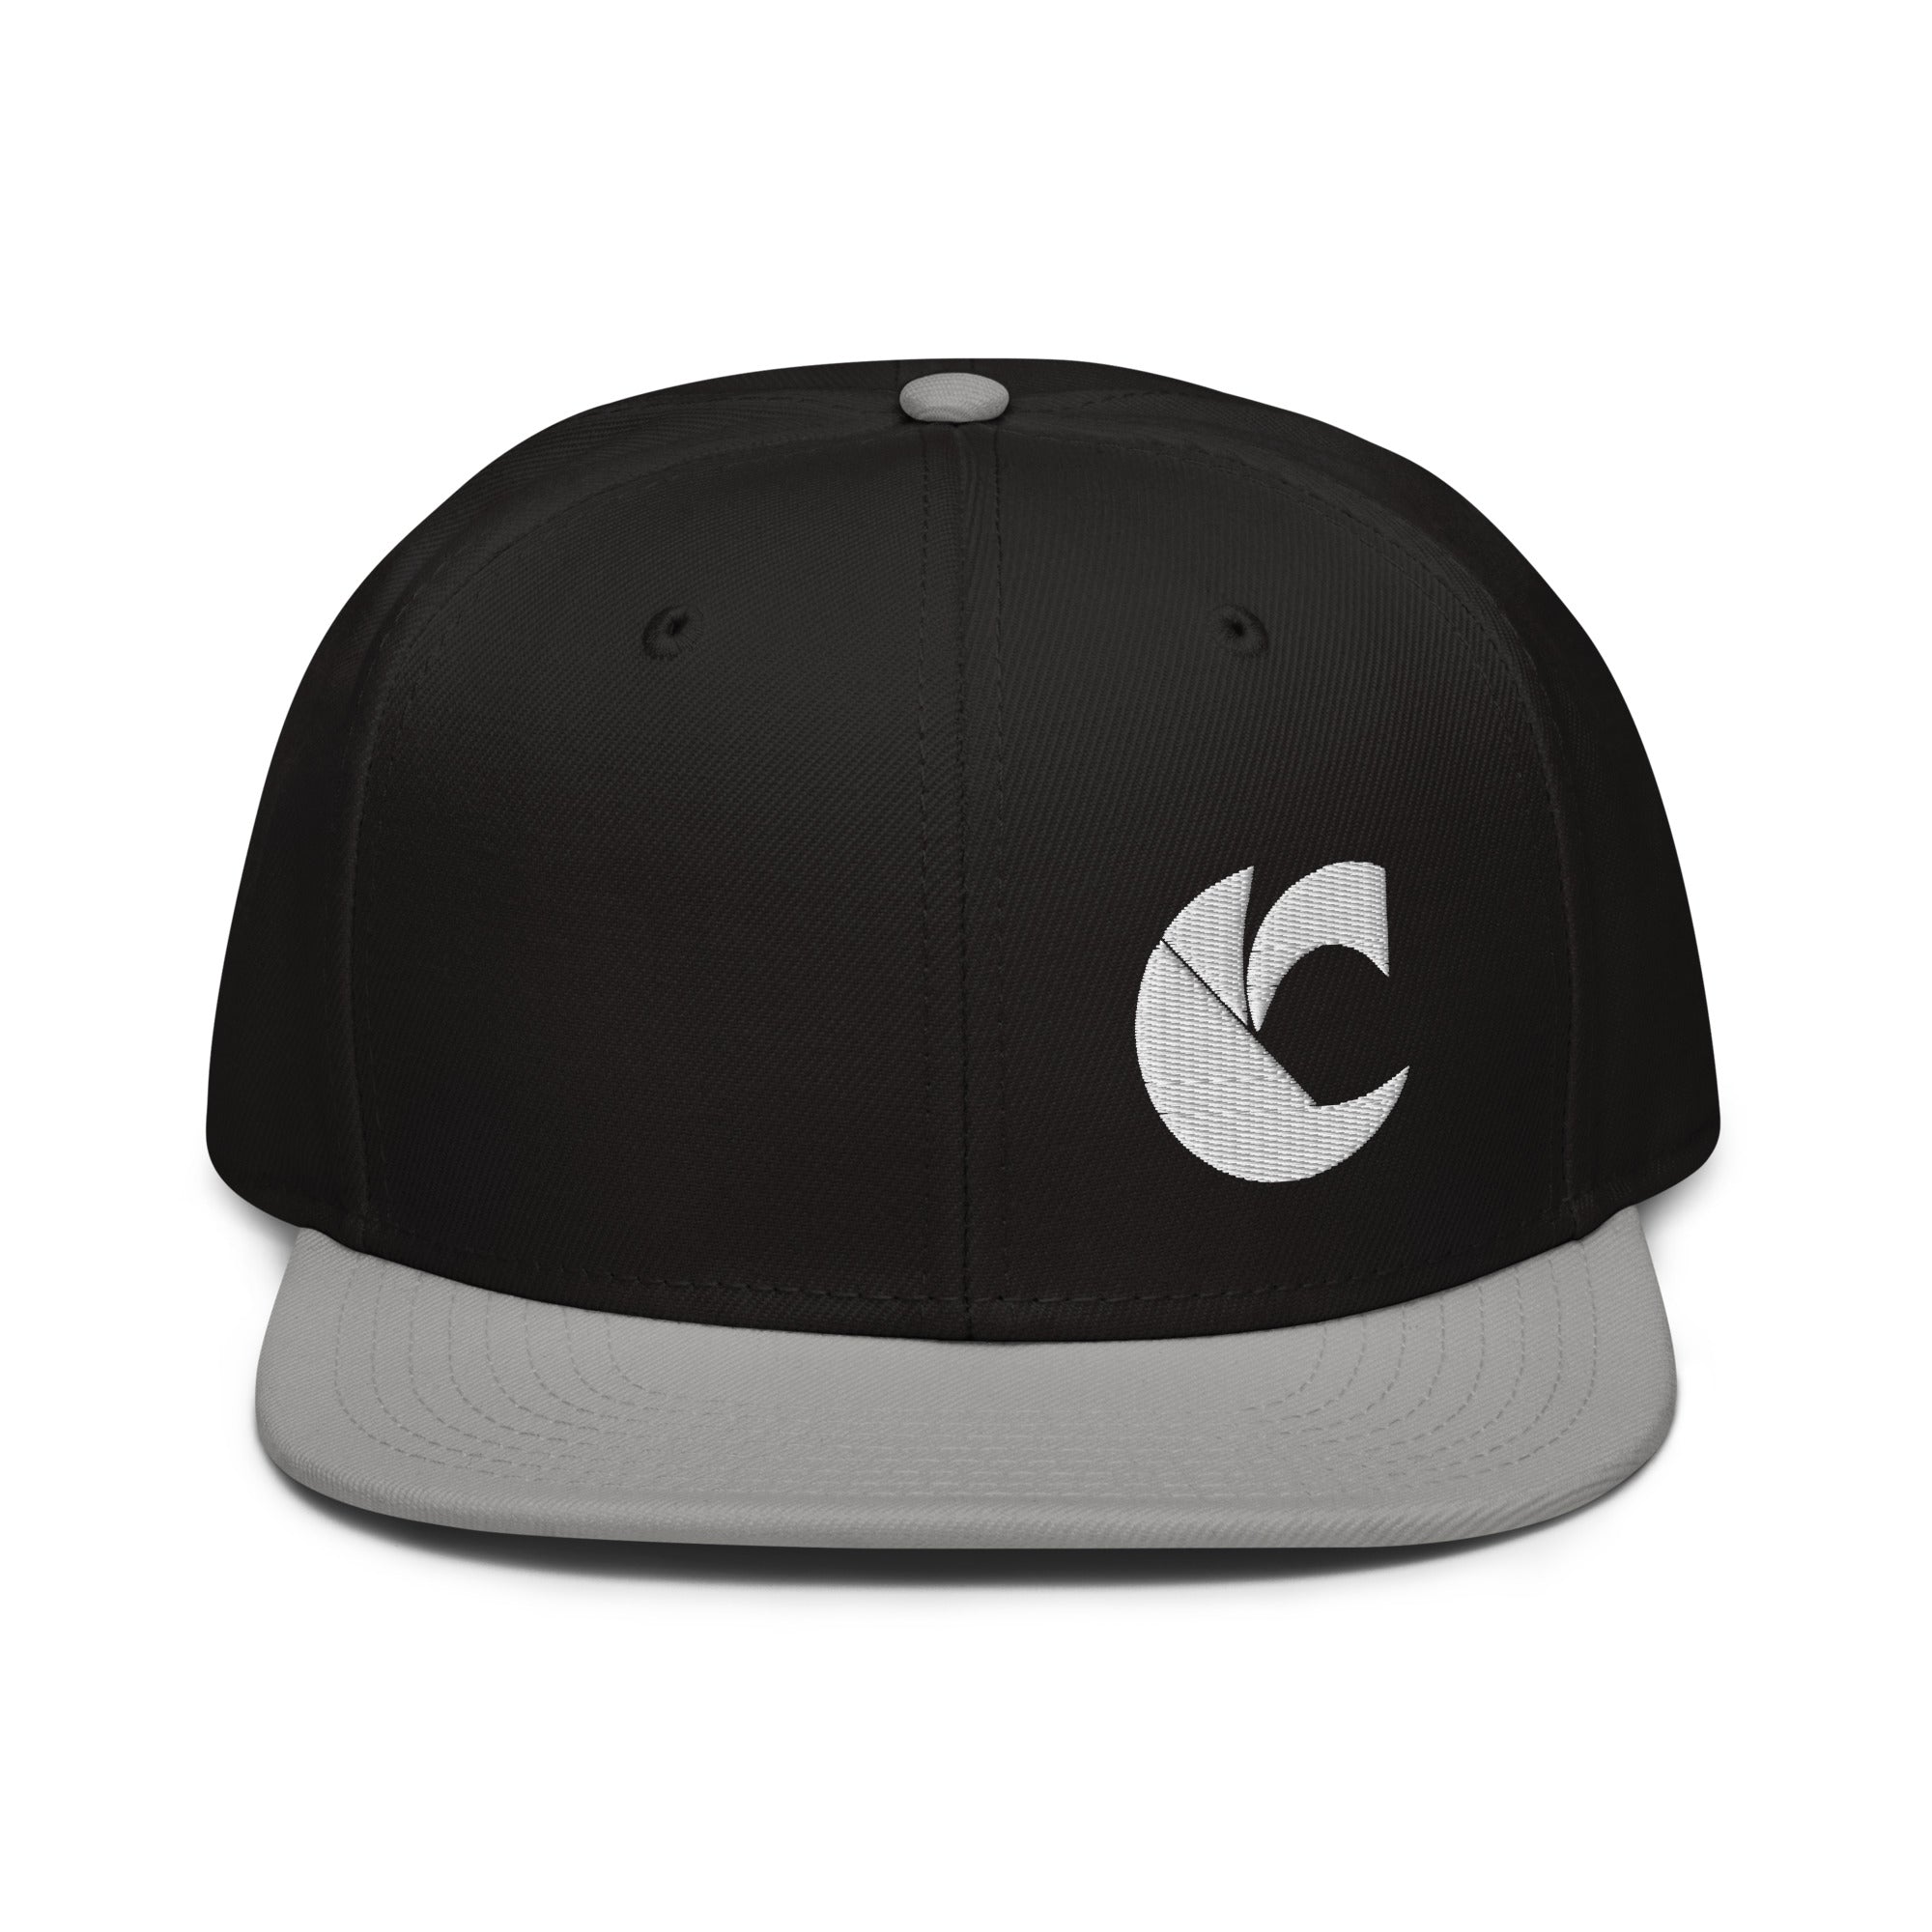 Canibus - Snapback Hat